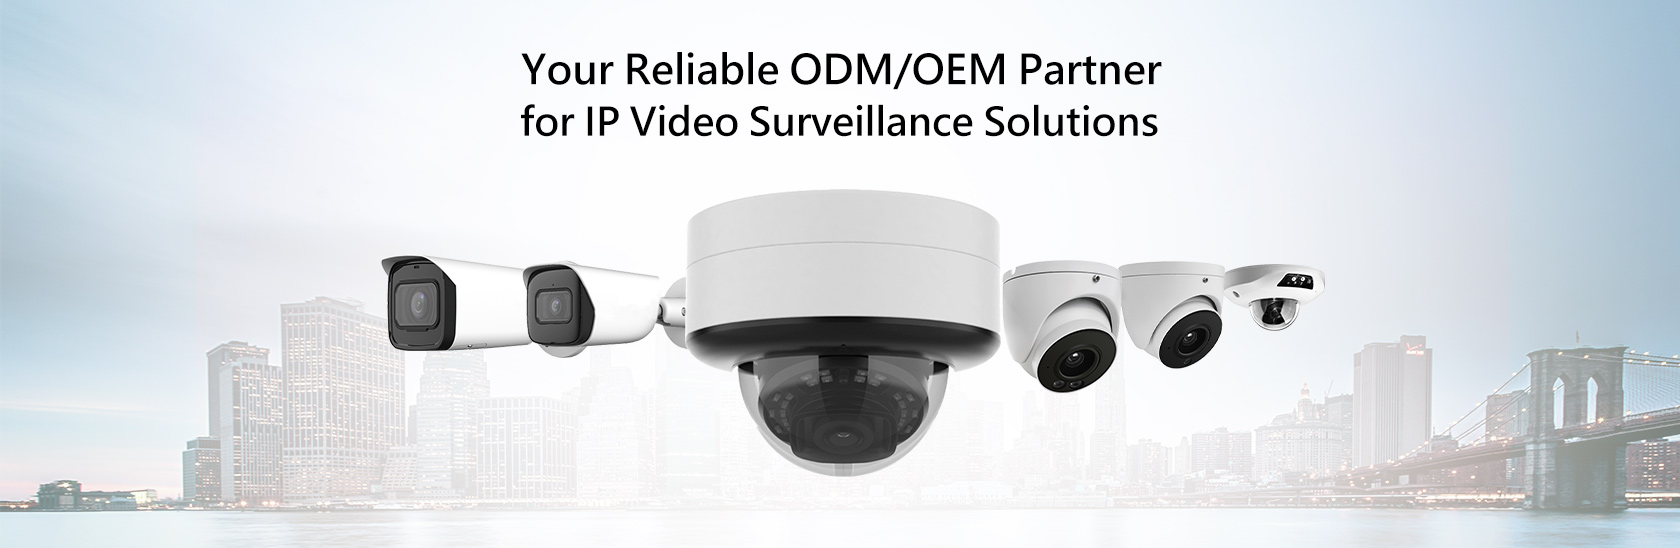 IP Camera ODM OEM Partner